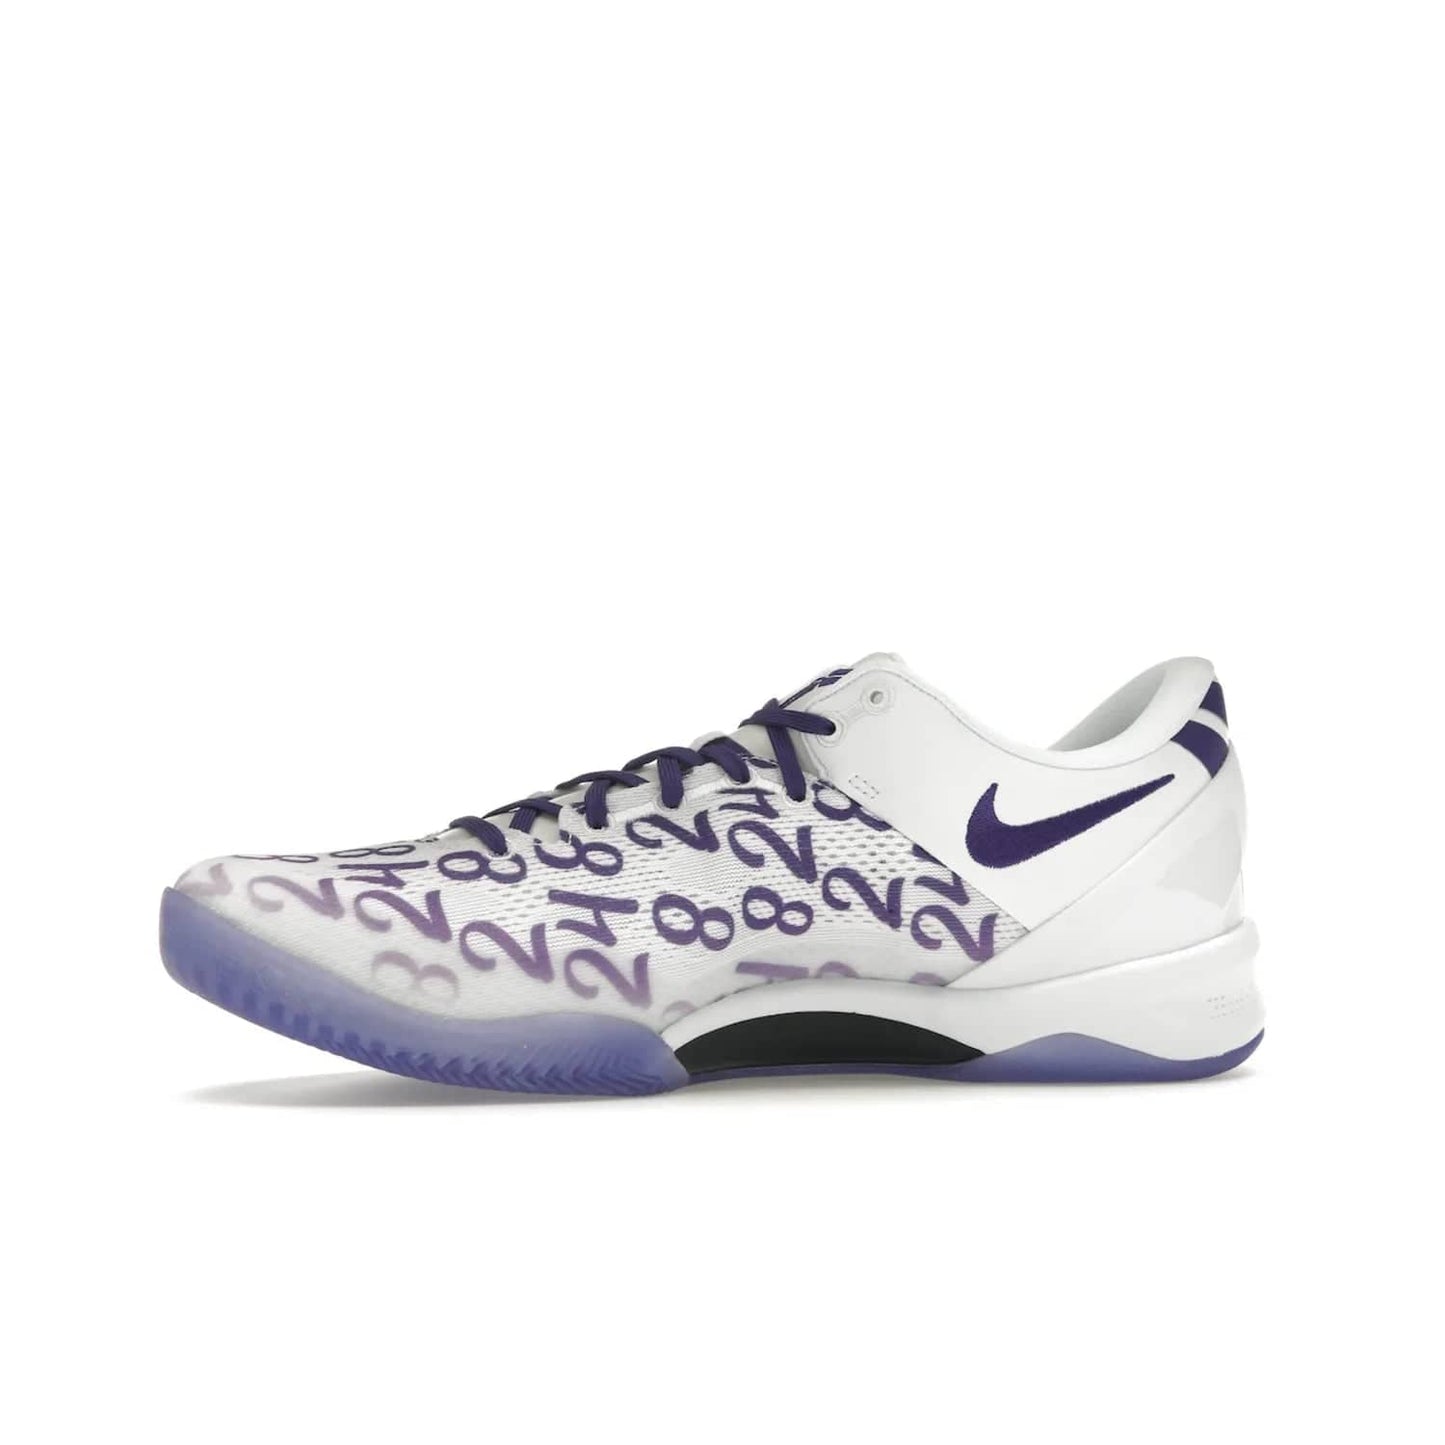 Nike Kobe 8 Protro Court Purple - Image 18 - Only at www.BallersClubKickz.com - 